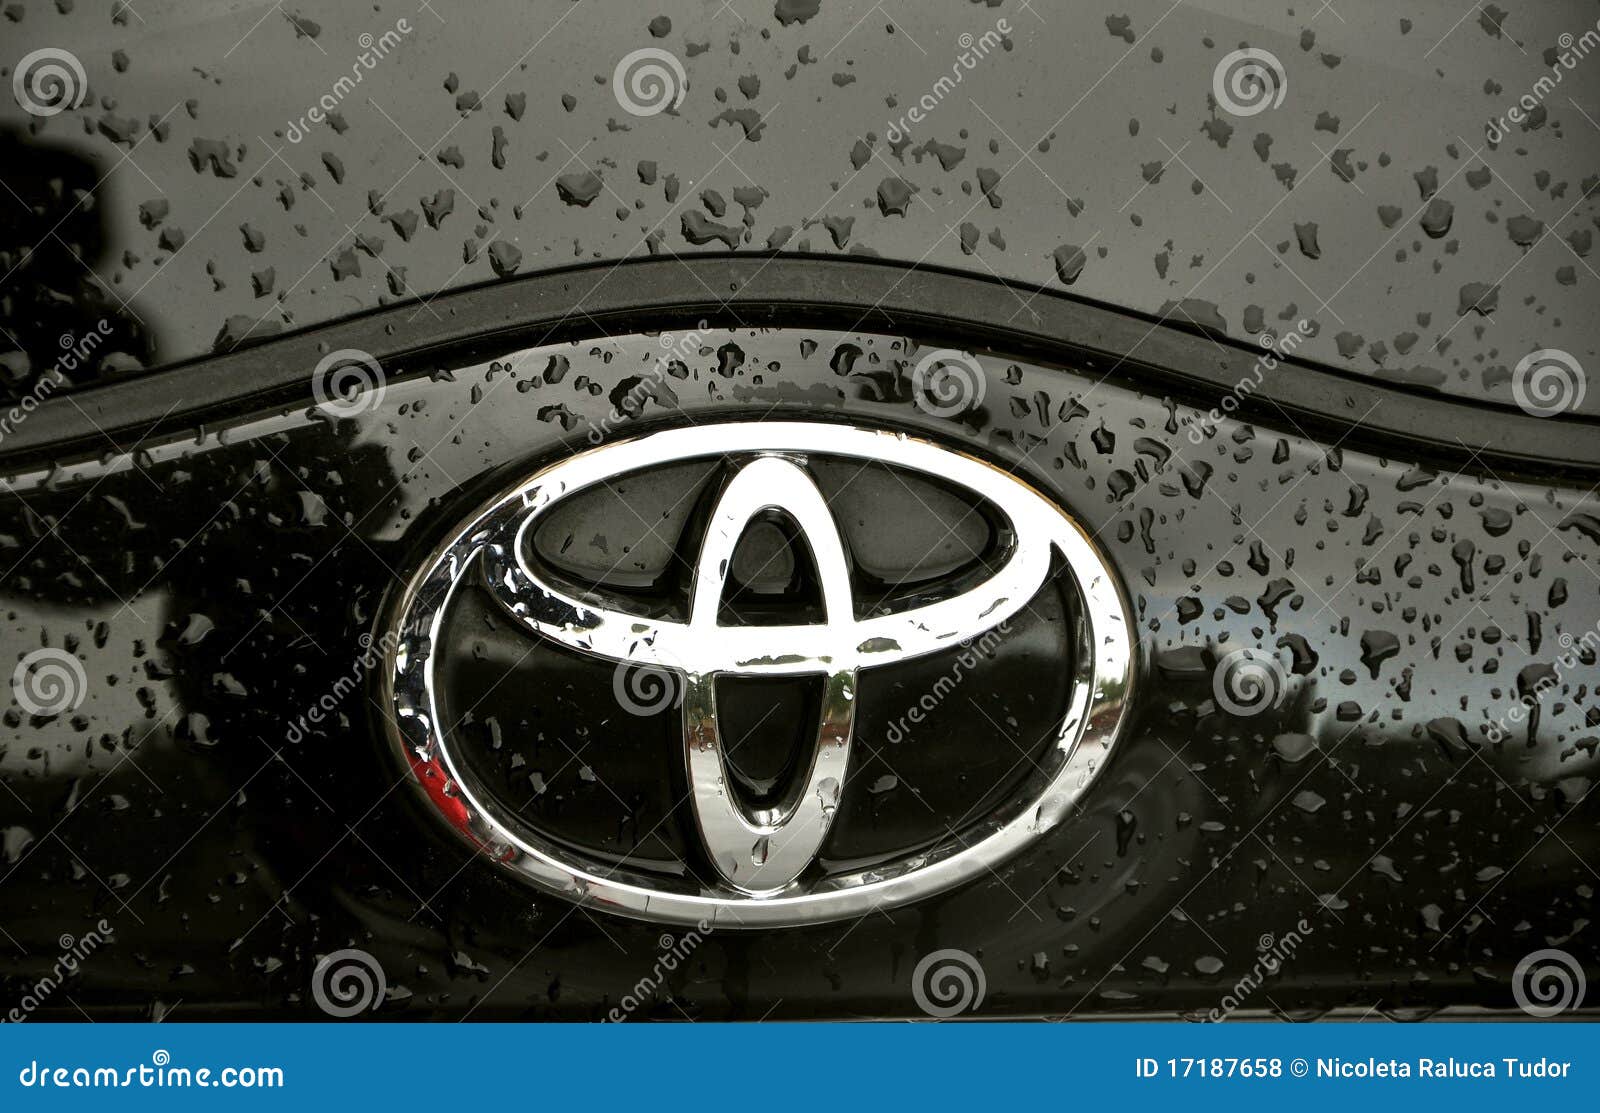 Toyota cars brand logo editorial stock photo. Image of light ...